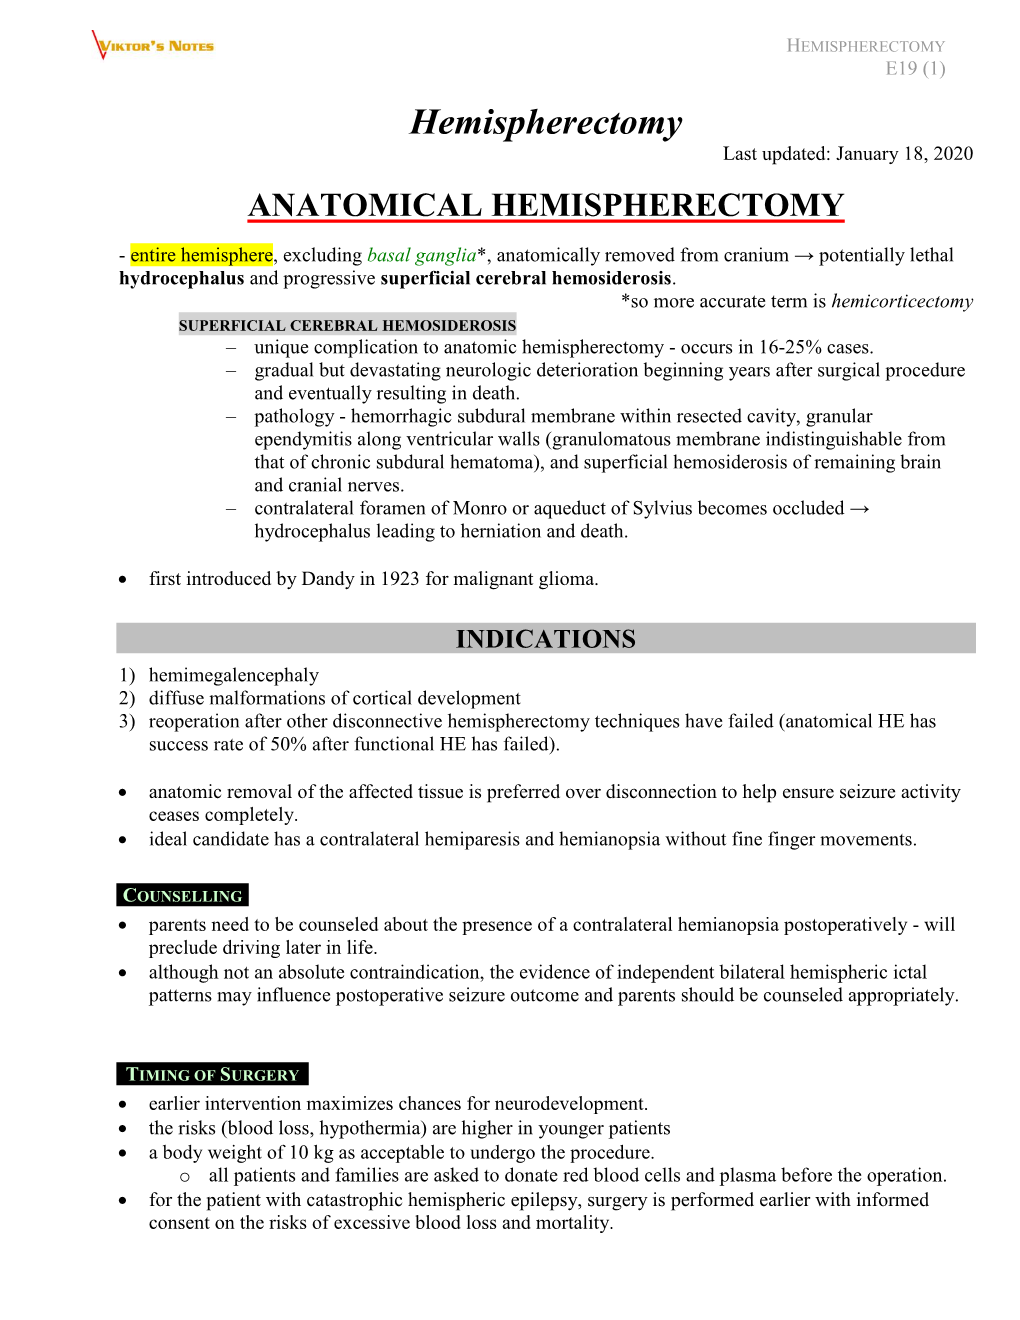 HEMISPHERECTOMY E19 (1) Hemispherectomy Last Updated: January 18, 2020 ANATOMICAL HEMISPHERECTOMY